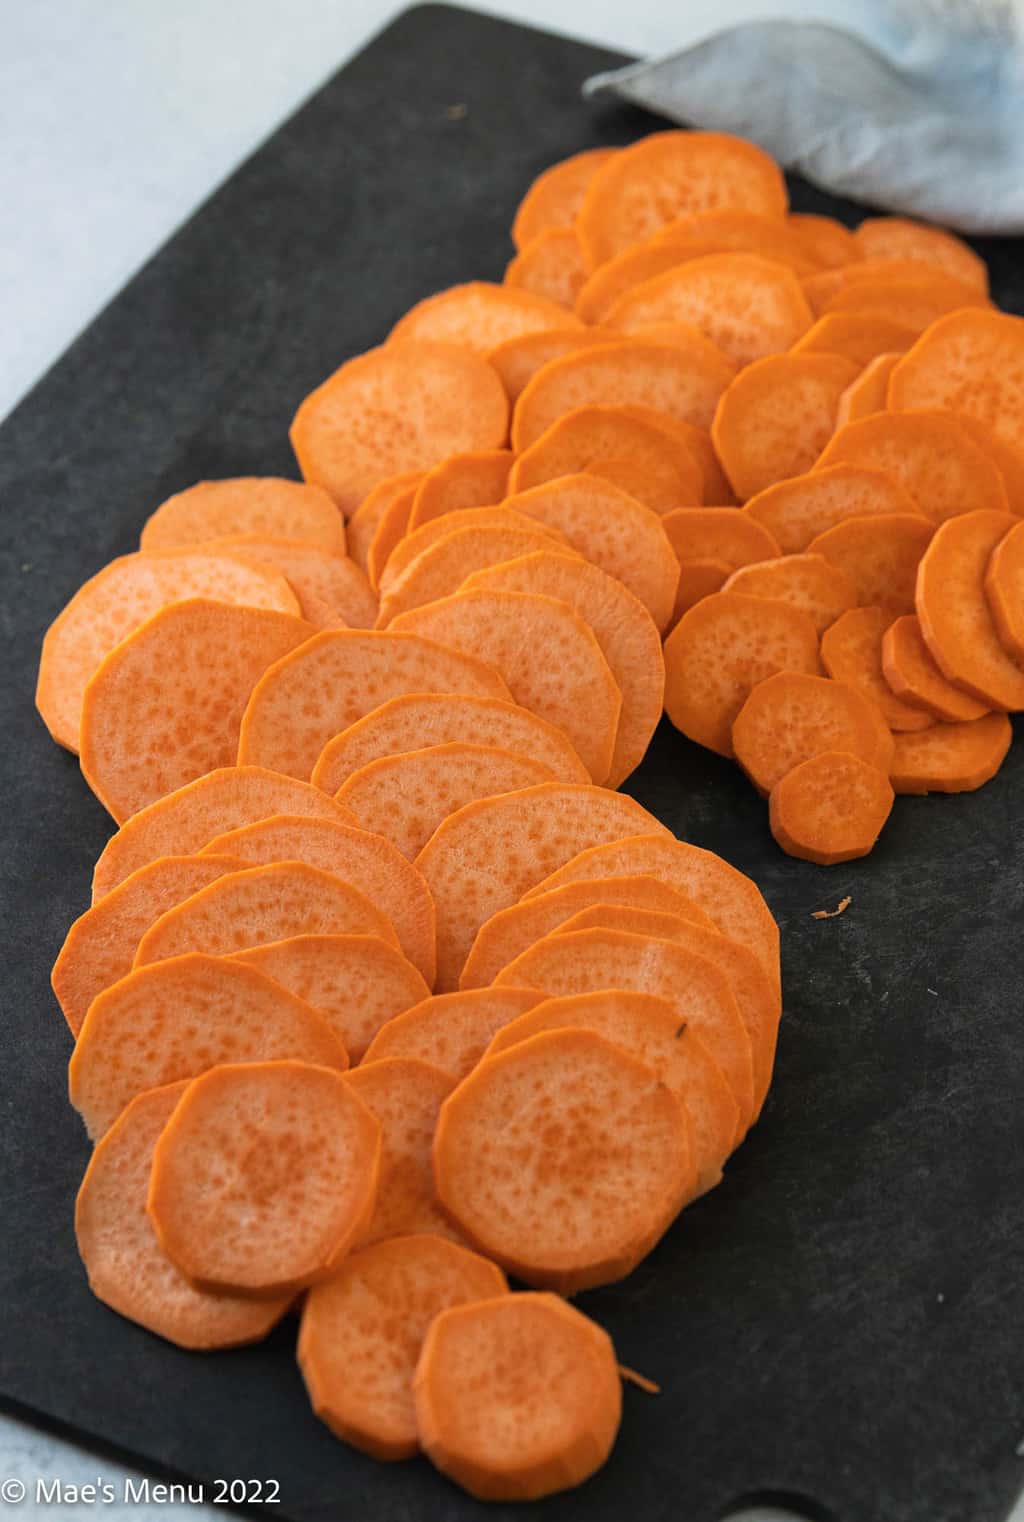 A cutting board of sliced sweet potatoes.